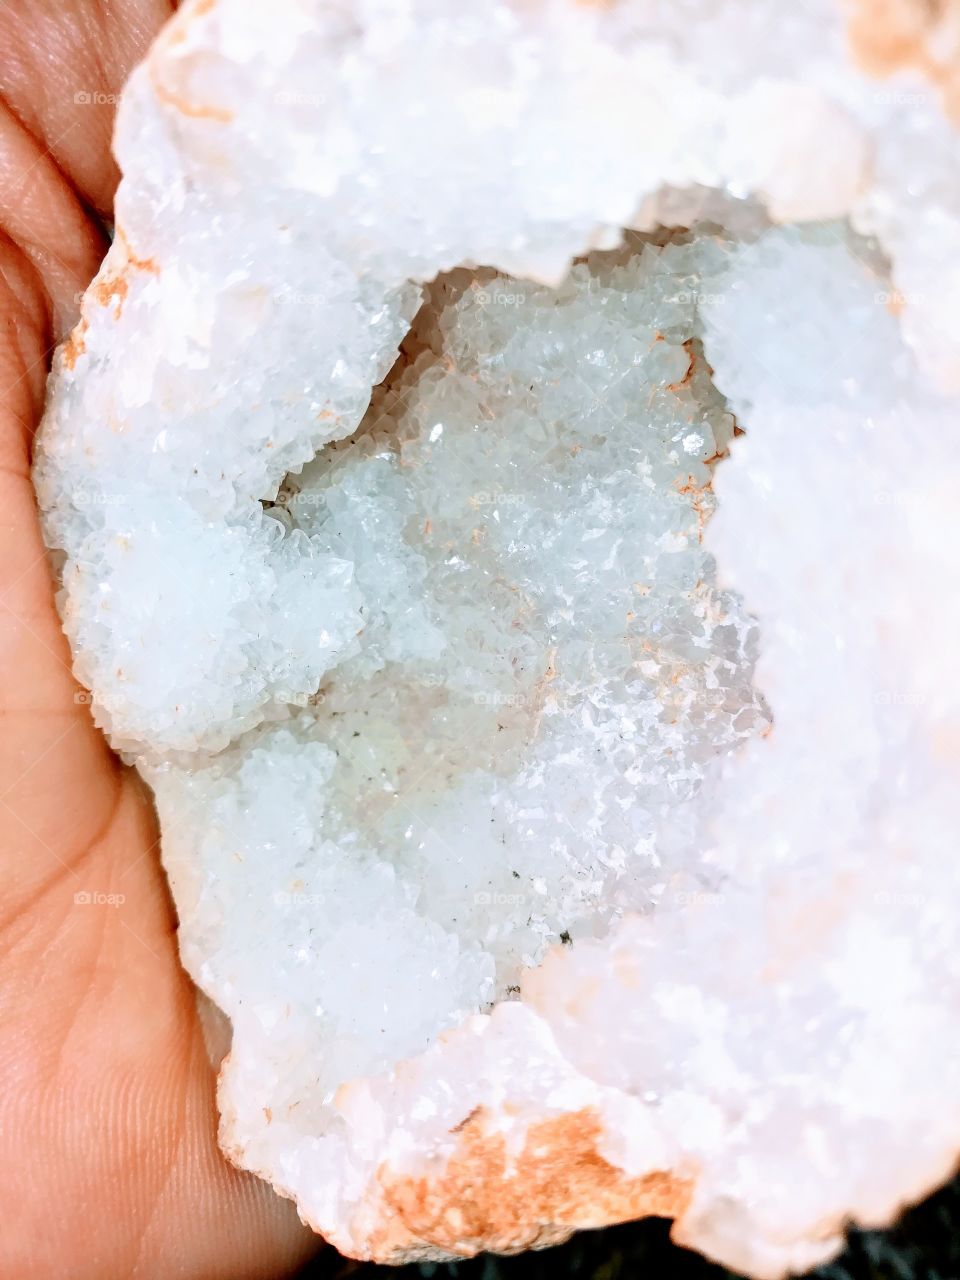 Crystal rocks